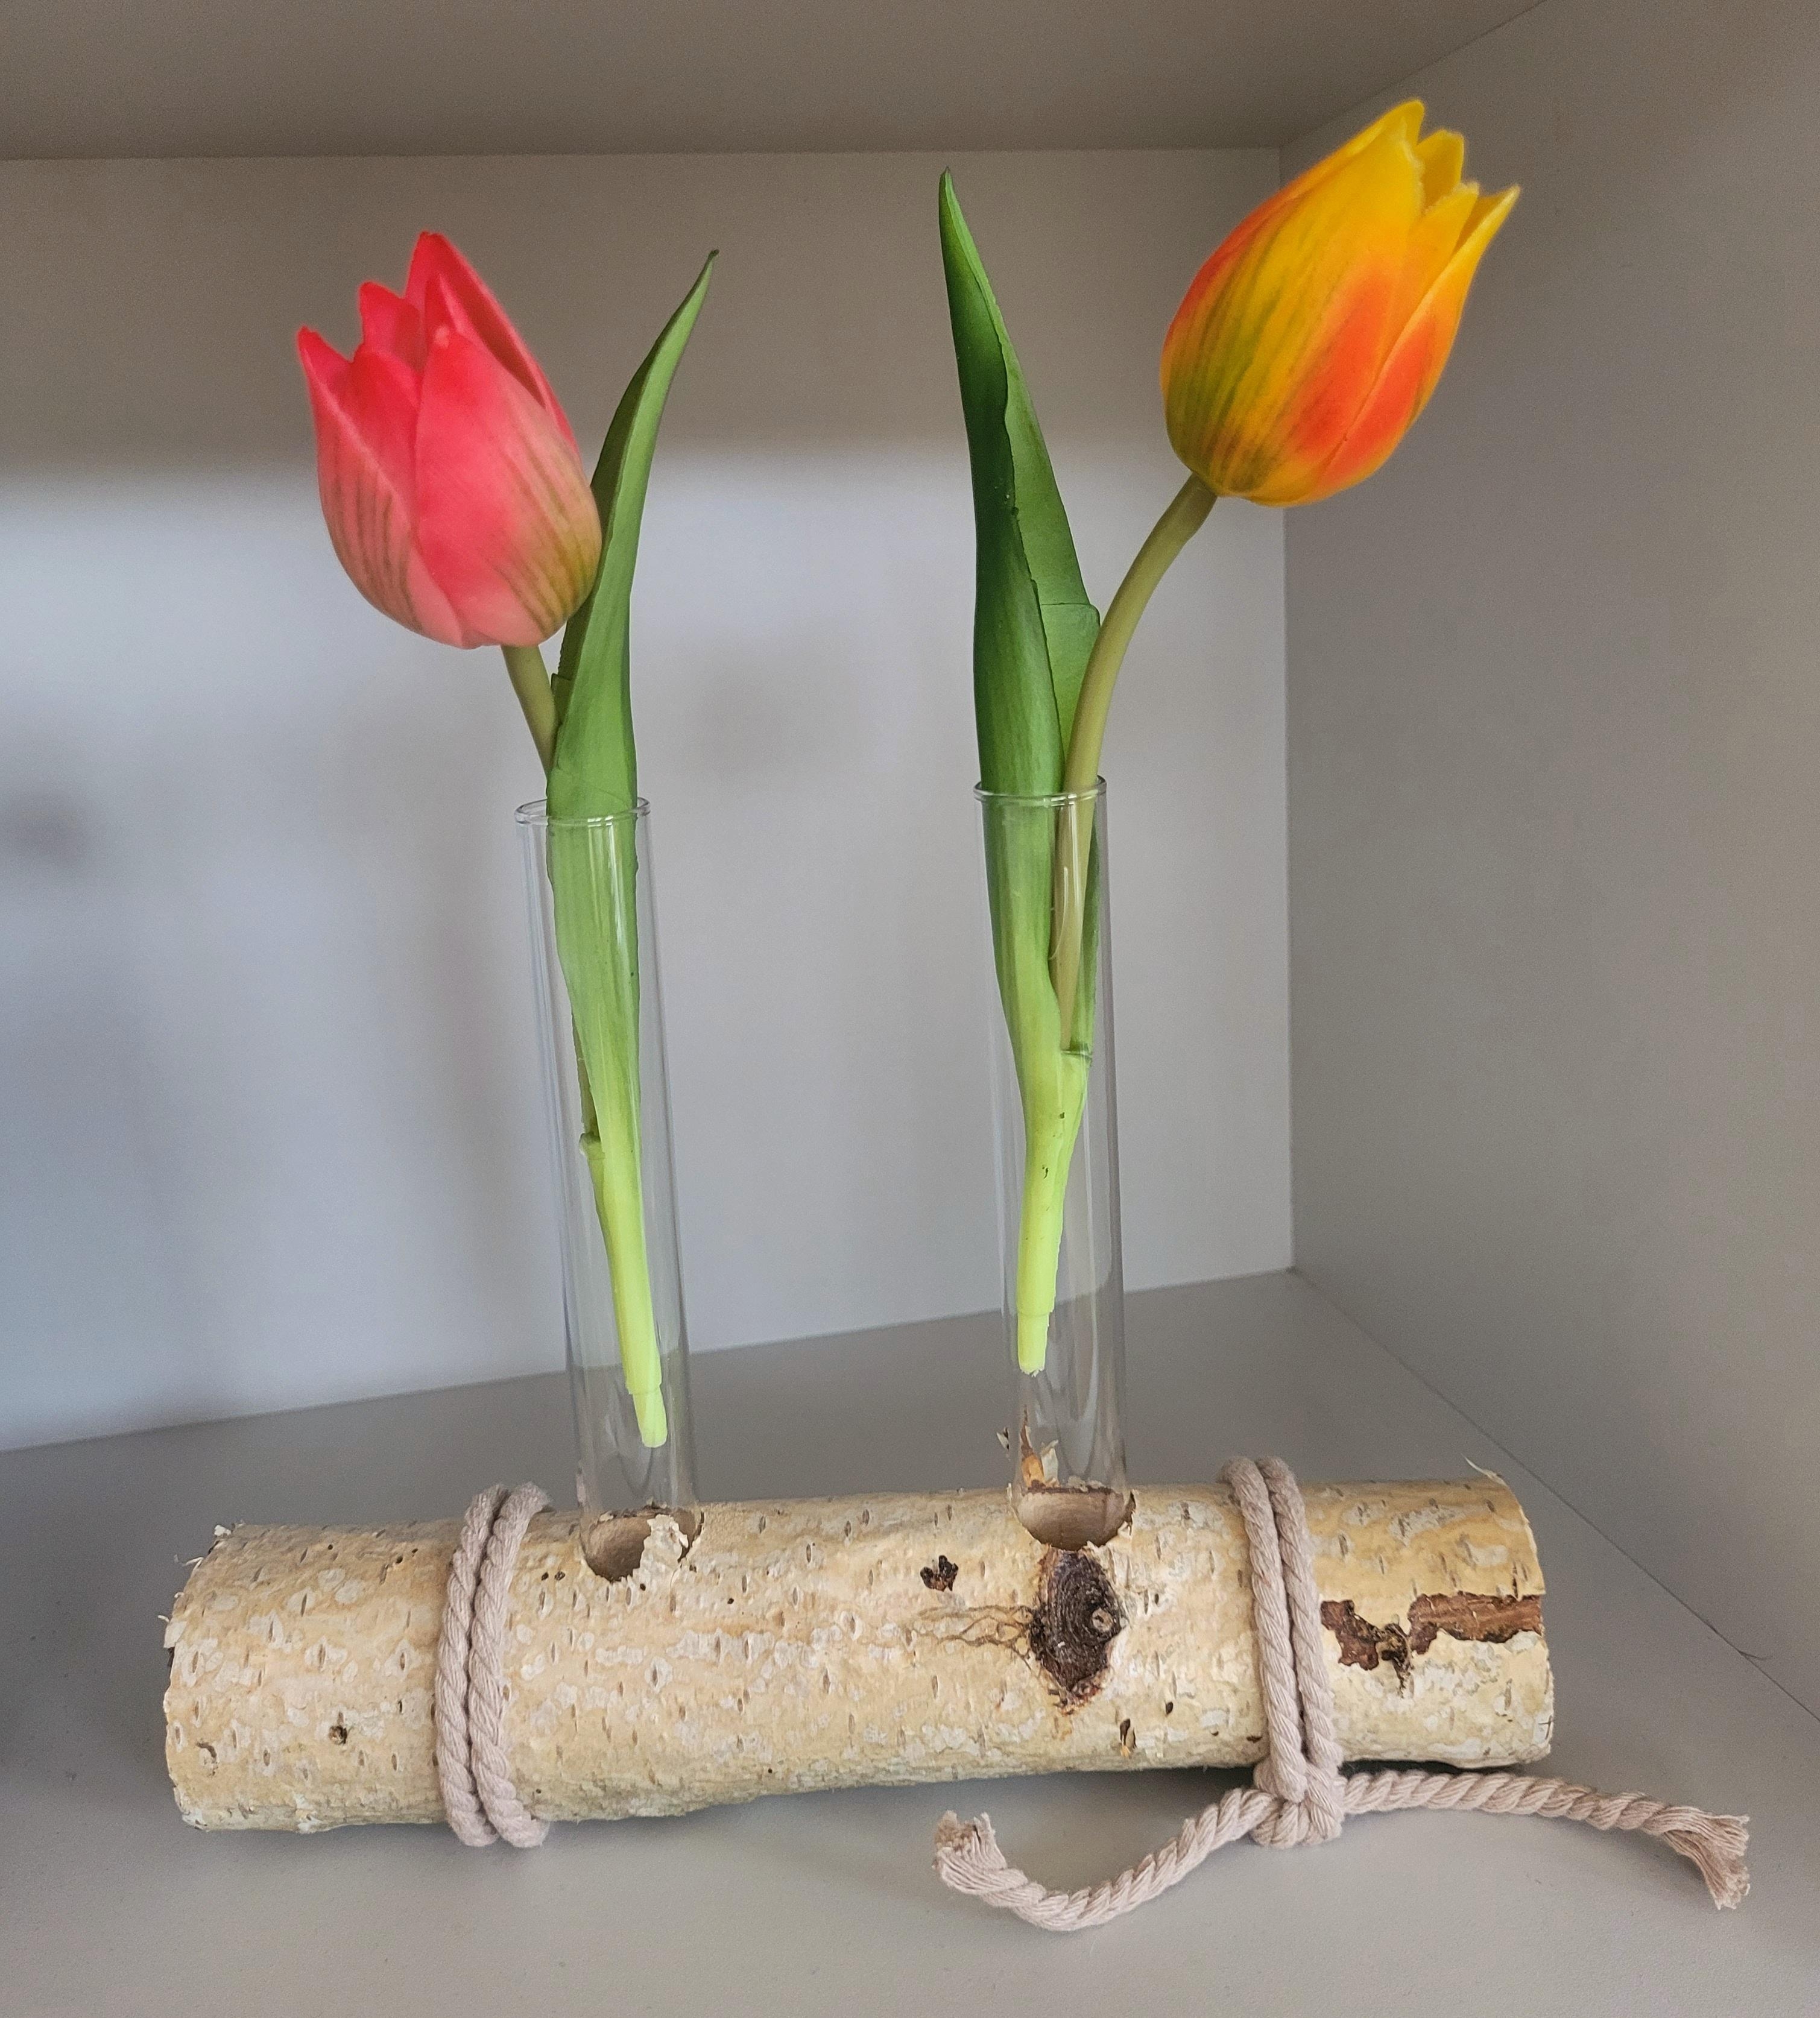 Fertiges DIY- Projekt 😊
#Frühling #Tulpenliebe #Natur